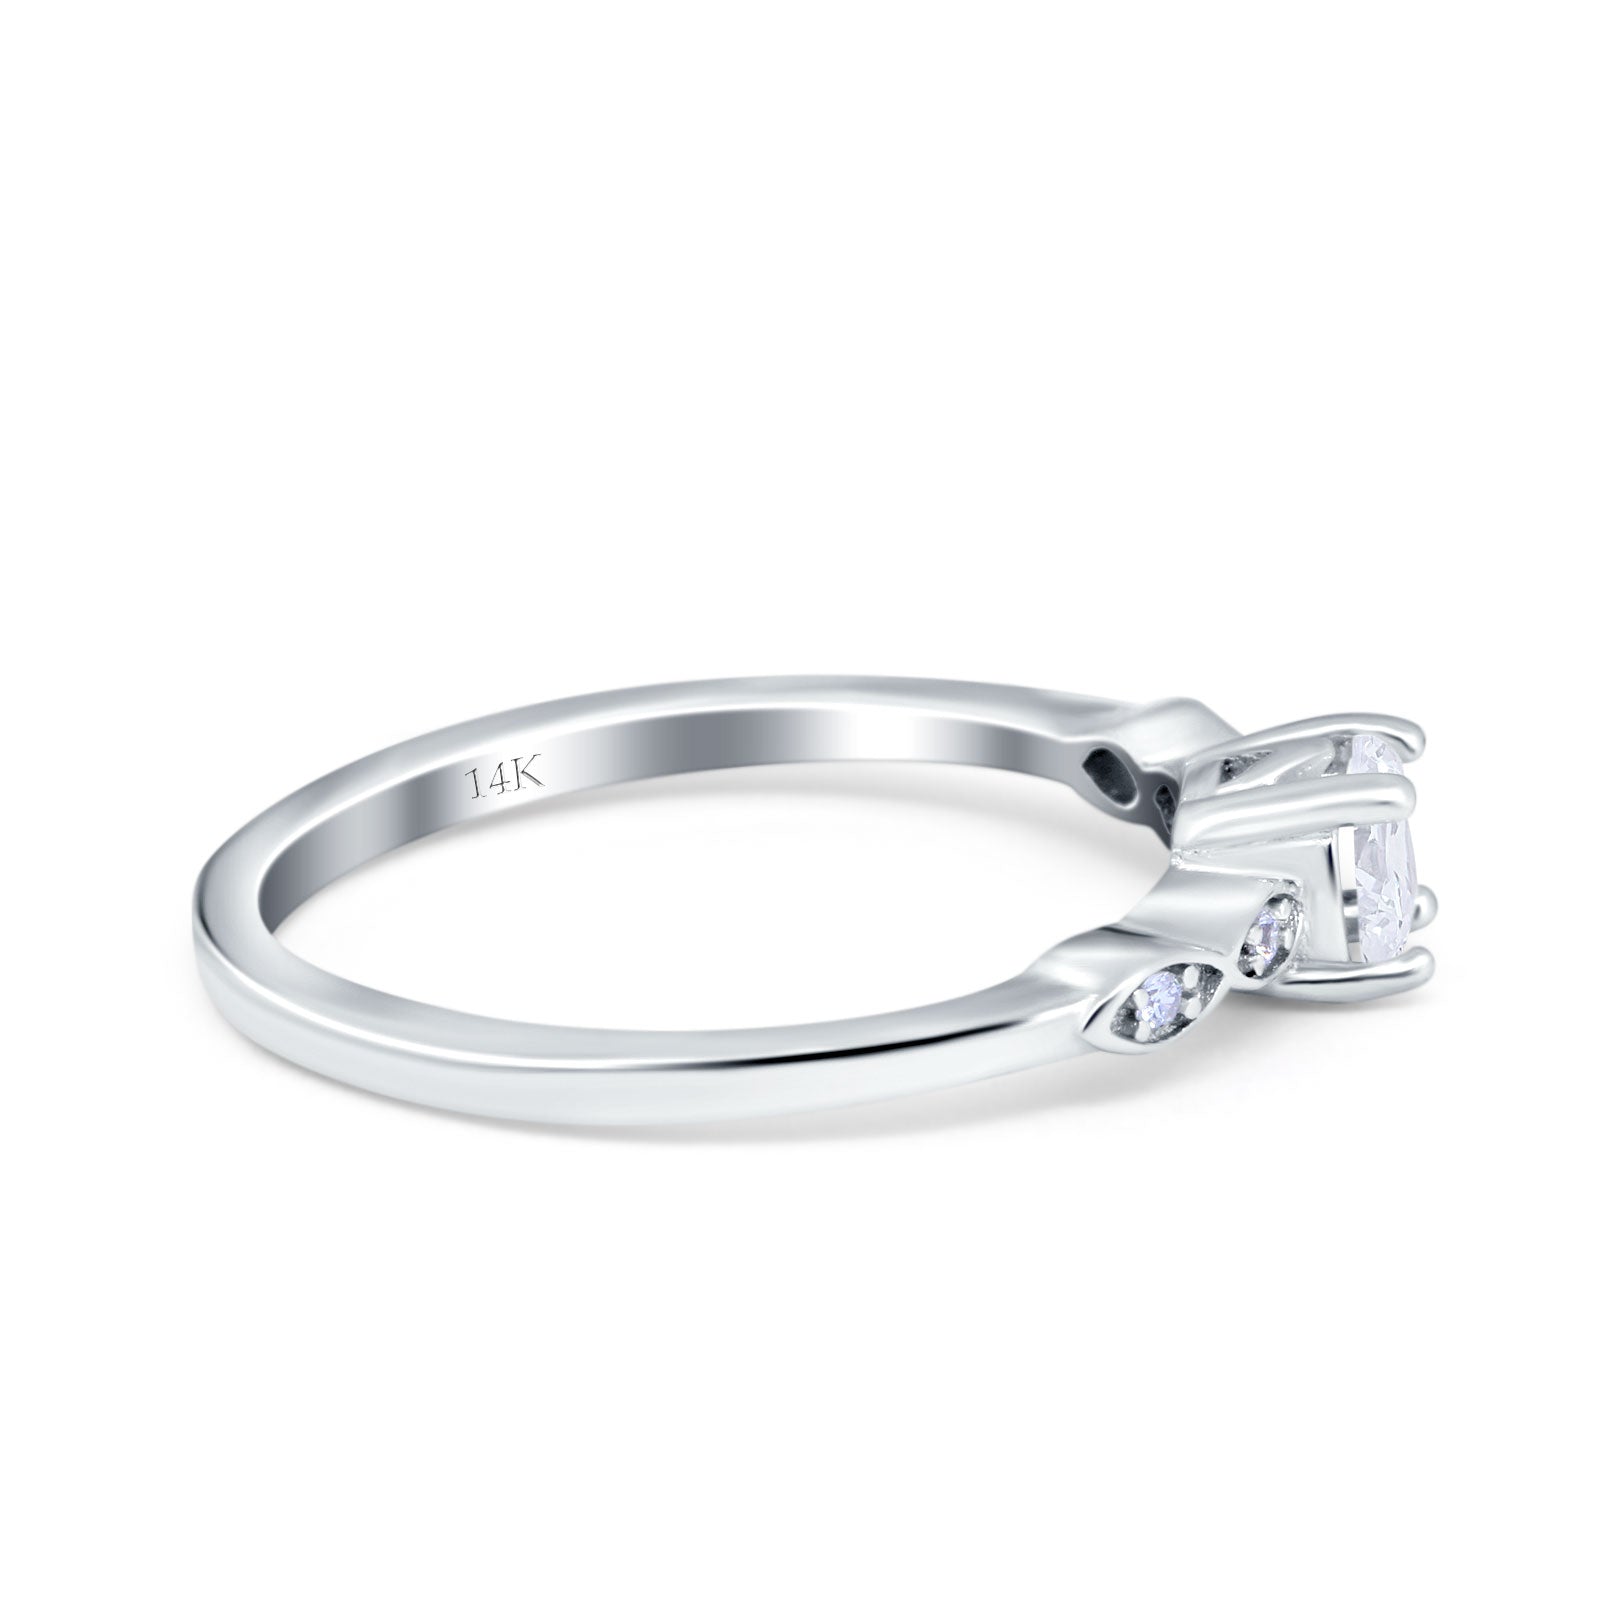 14K Gold Petite Dainty Round Shape Bridal Simulated Cubic Zirconia Wedding Engagement Ring